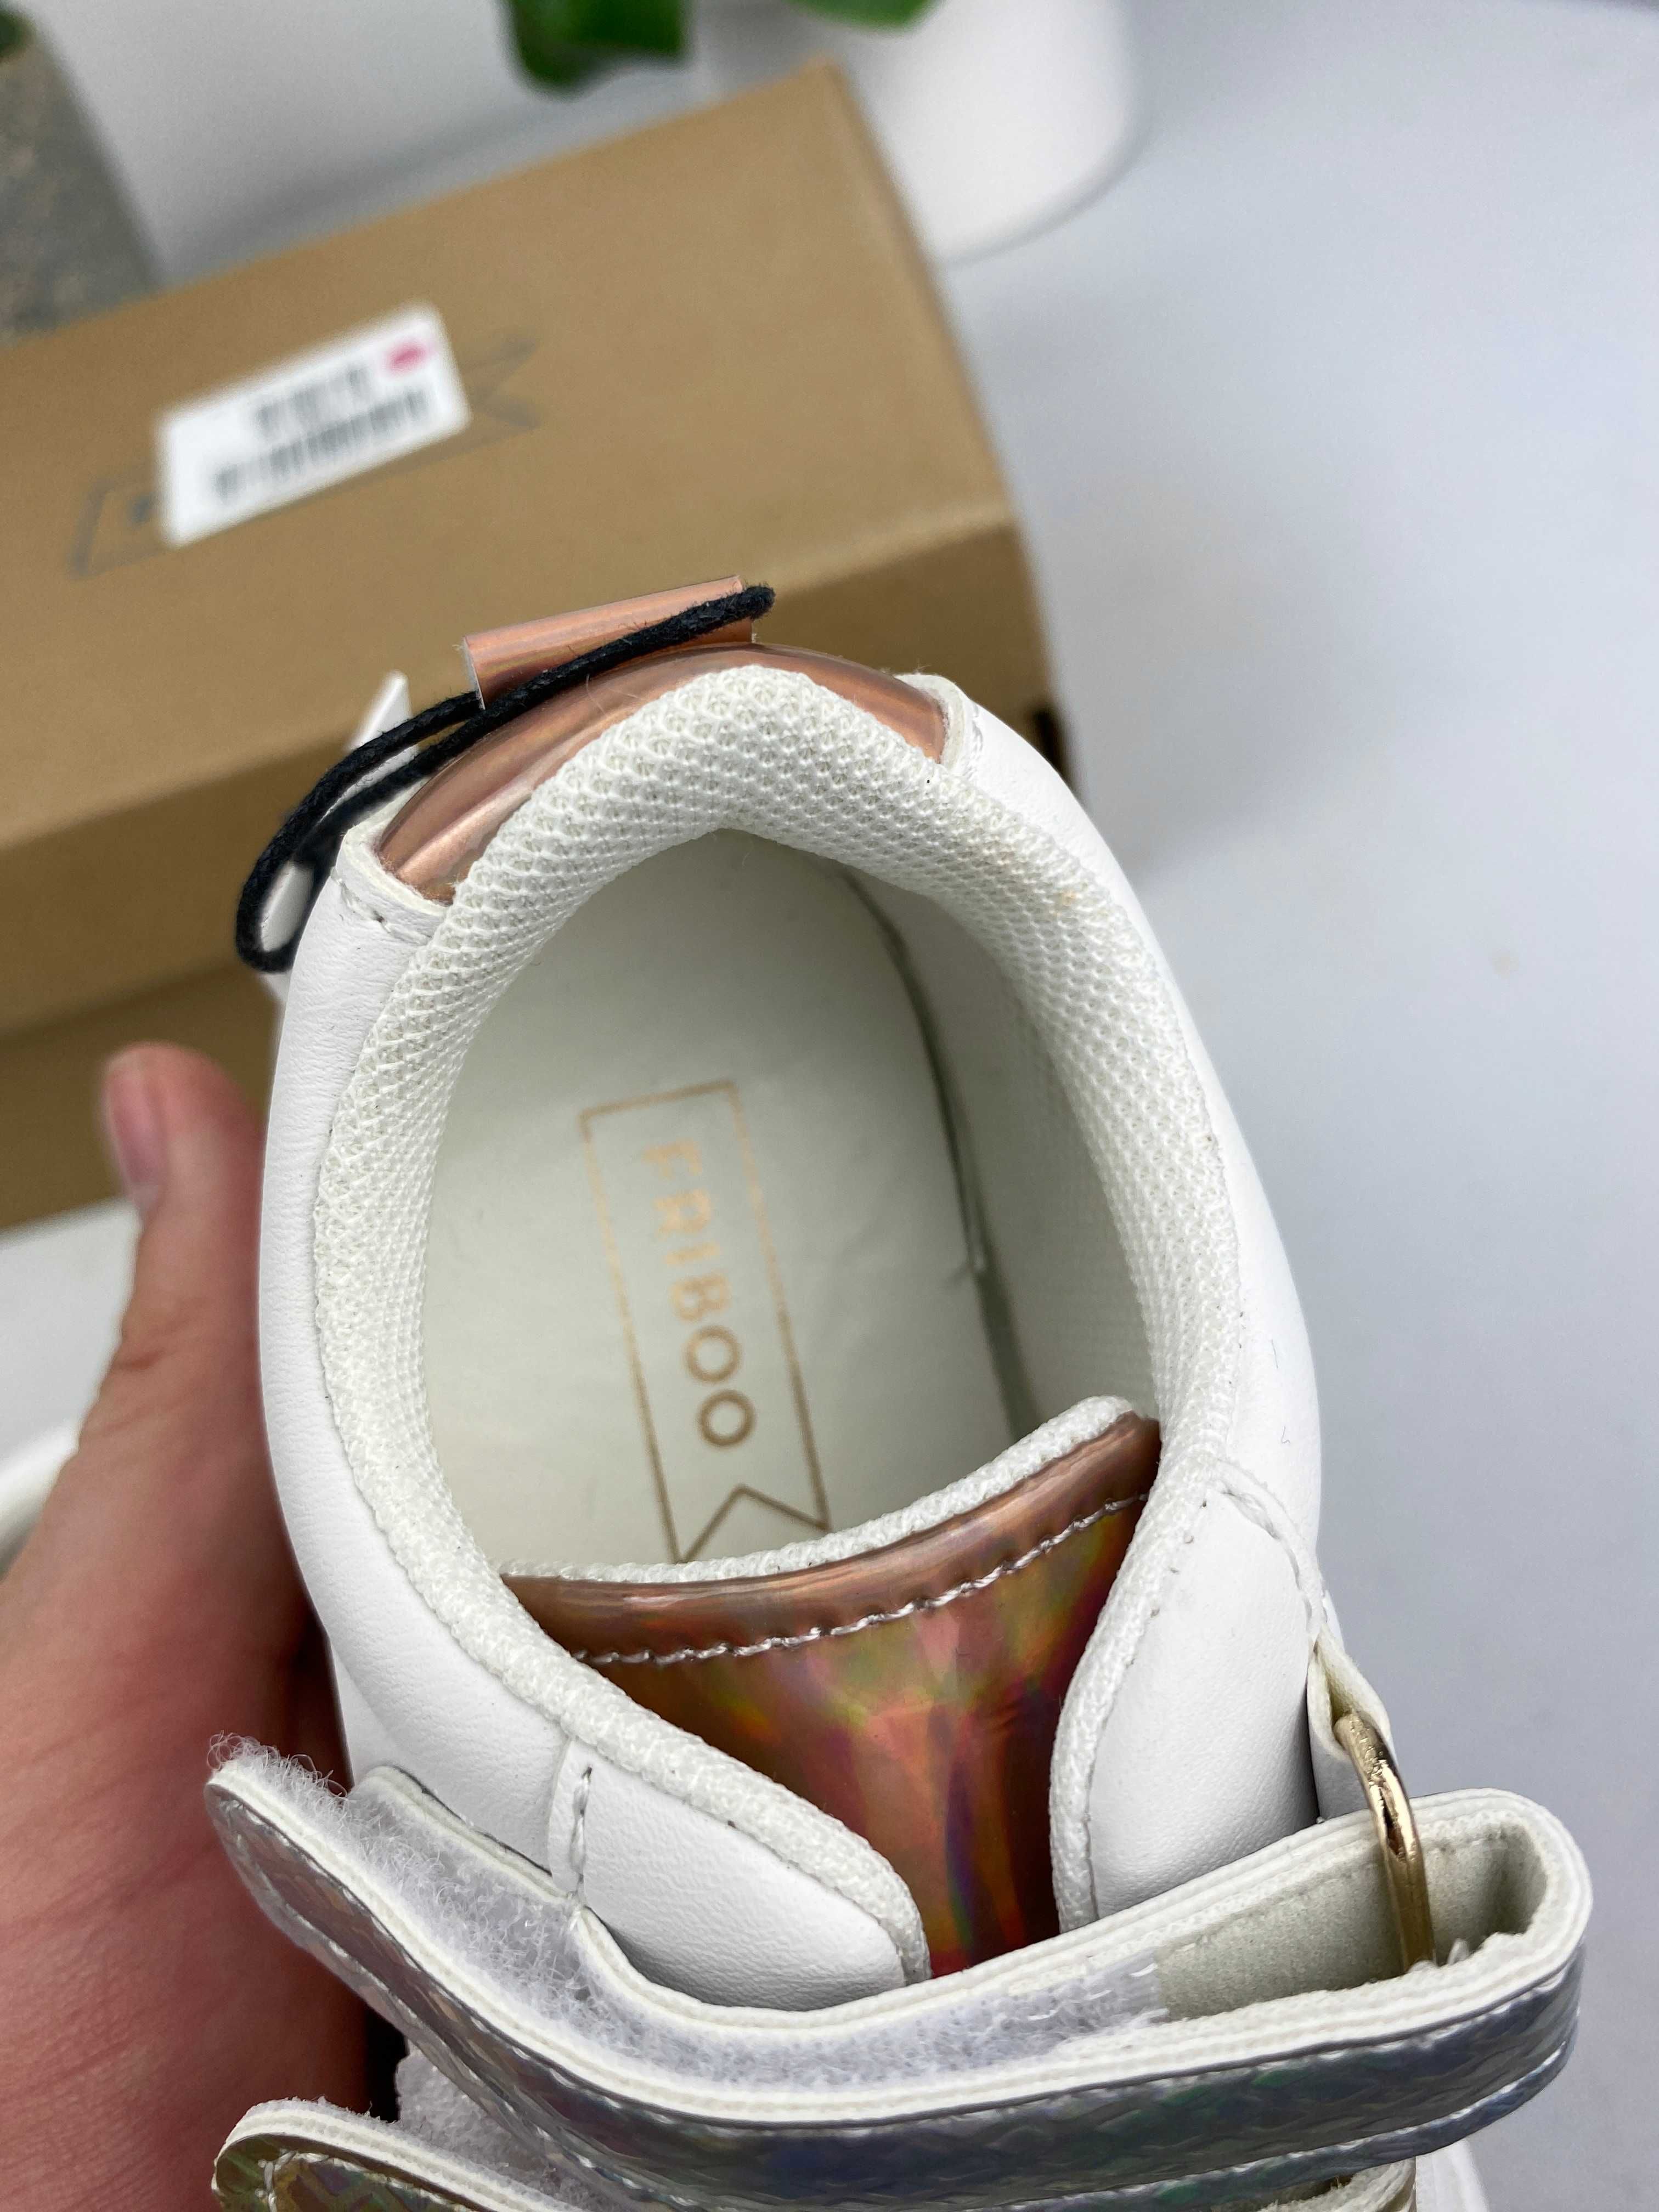 białe różowe buty sneakersy friboo r. 26 n124a